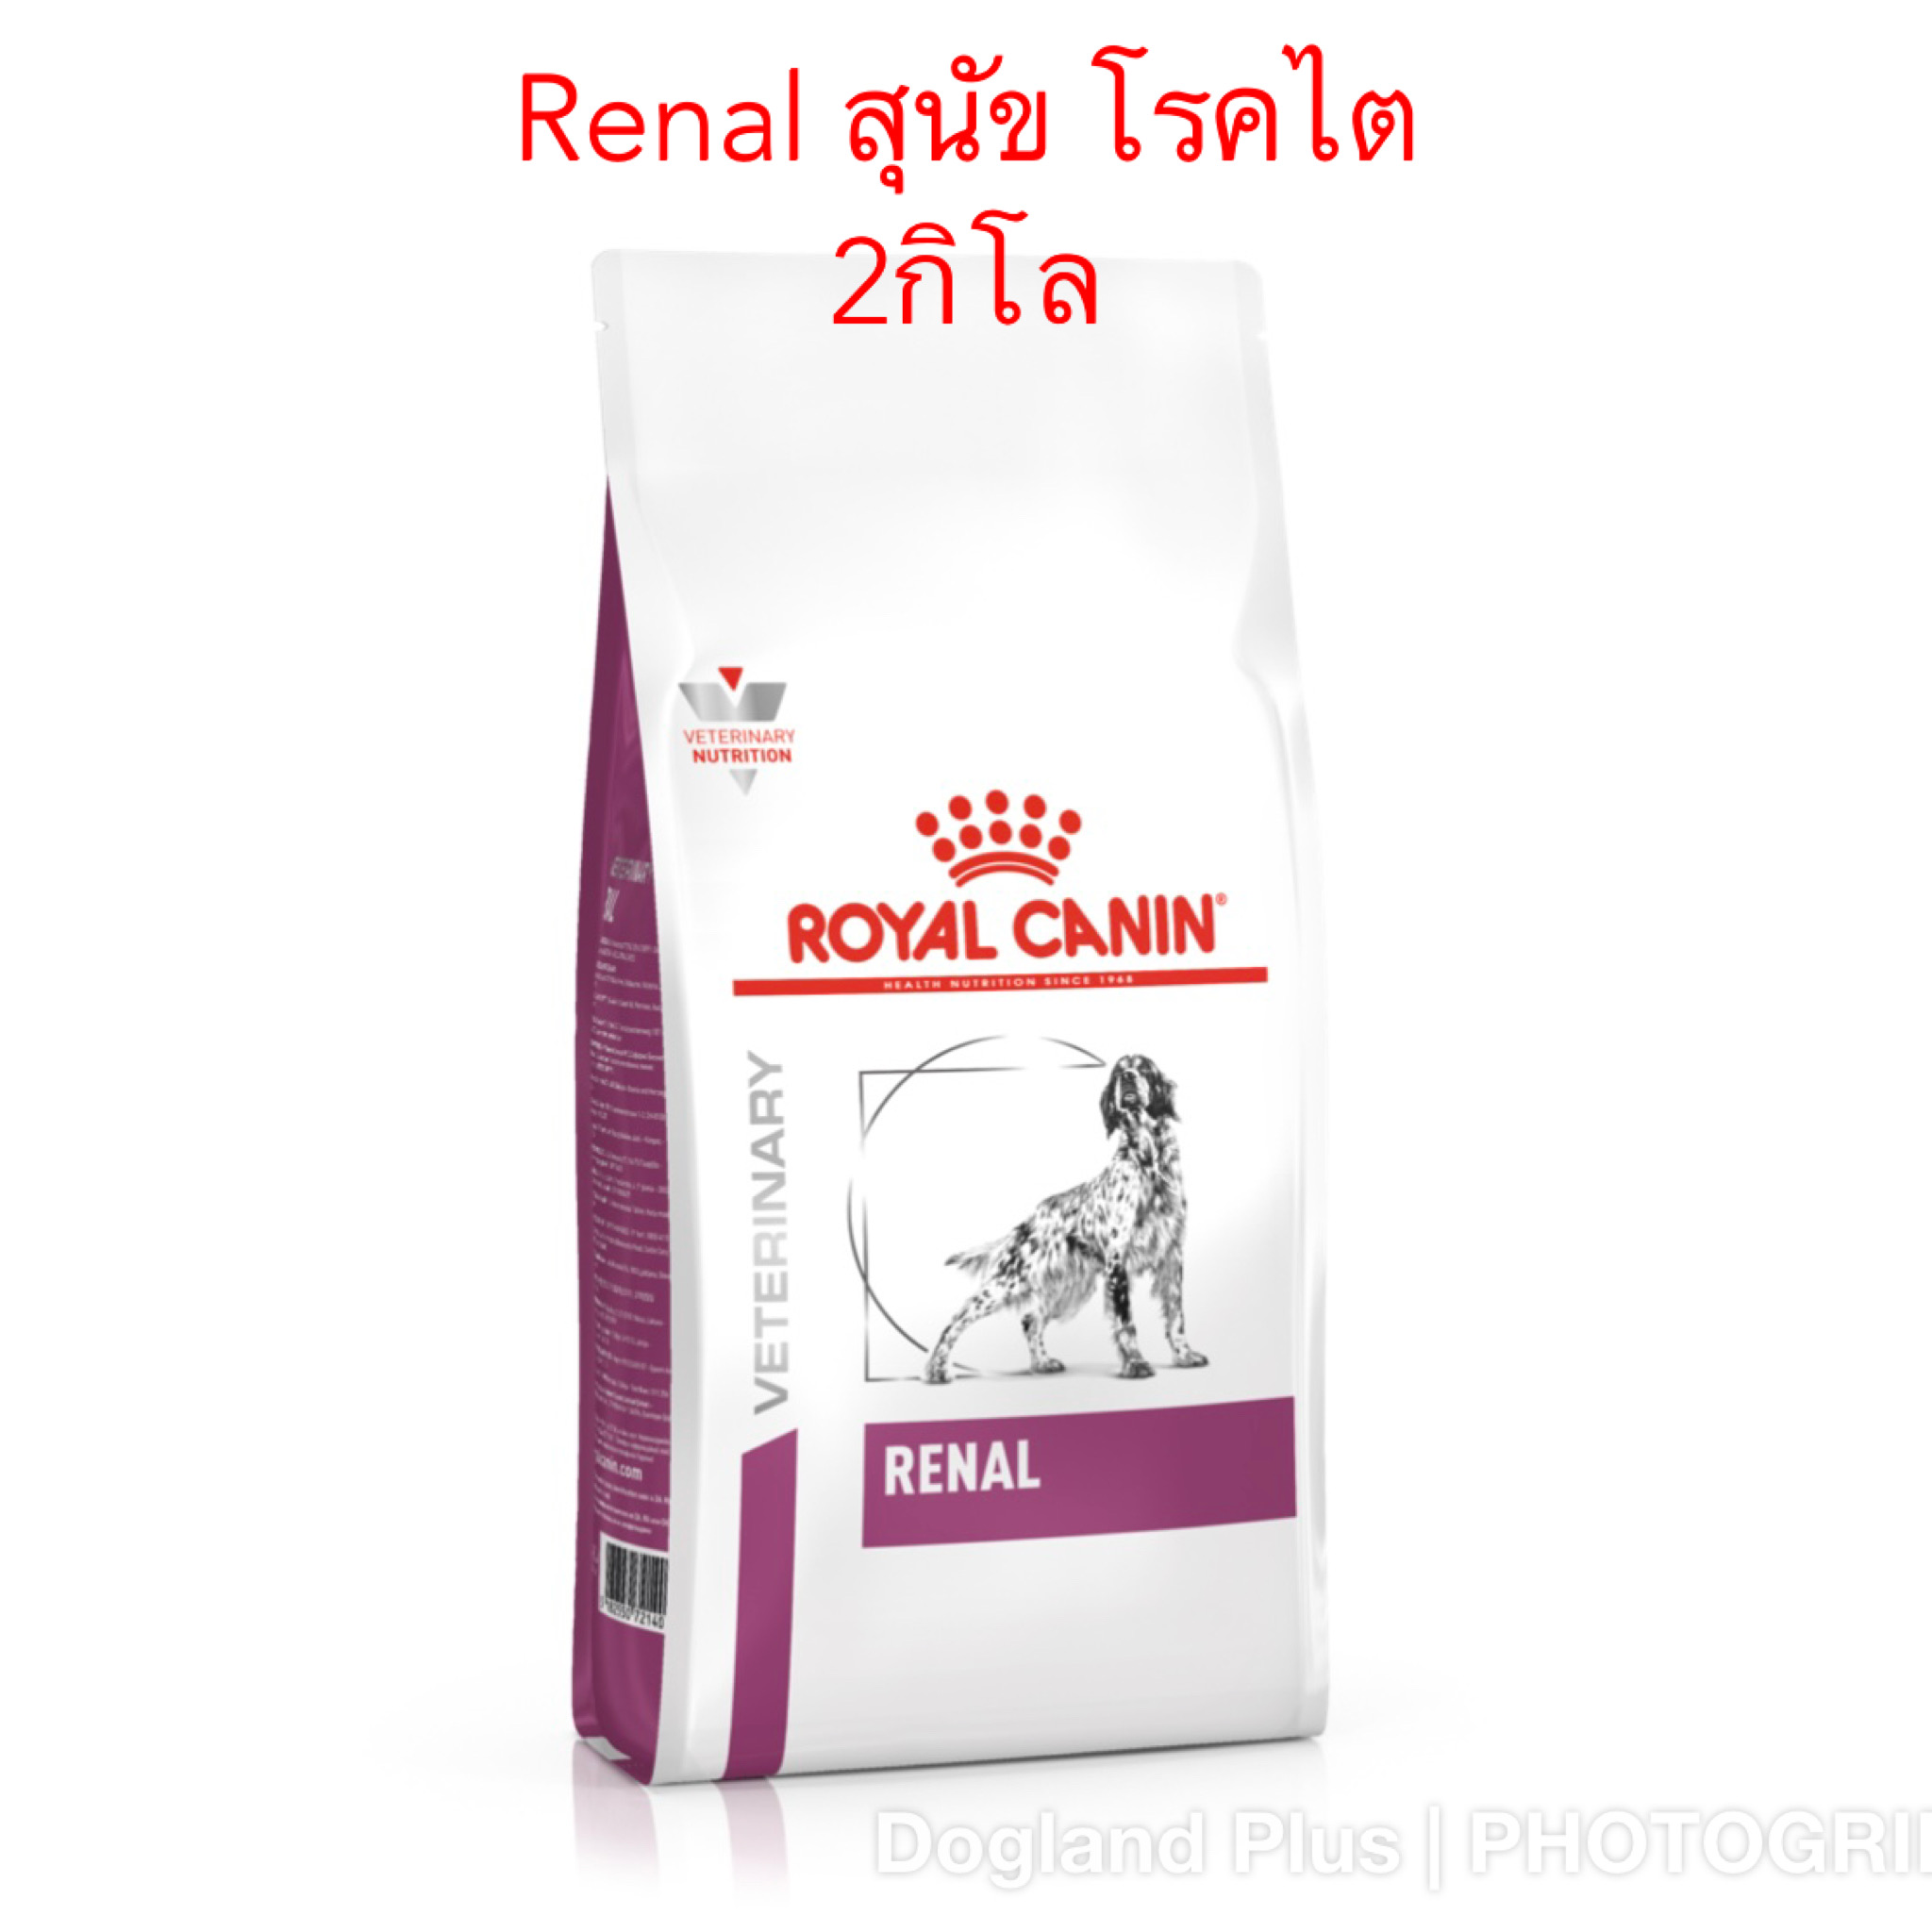 Royal Canin Renal สุนัข โรคไต 2 กิโล (แพ็คเกจ ใหม่)